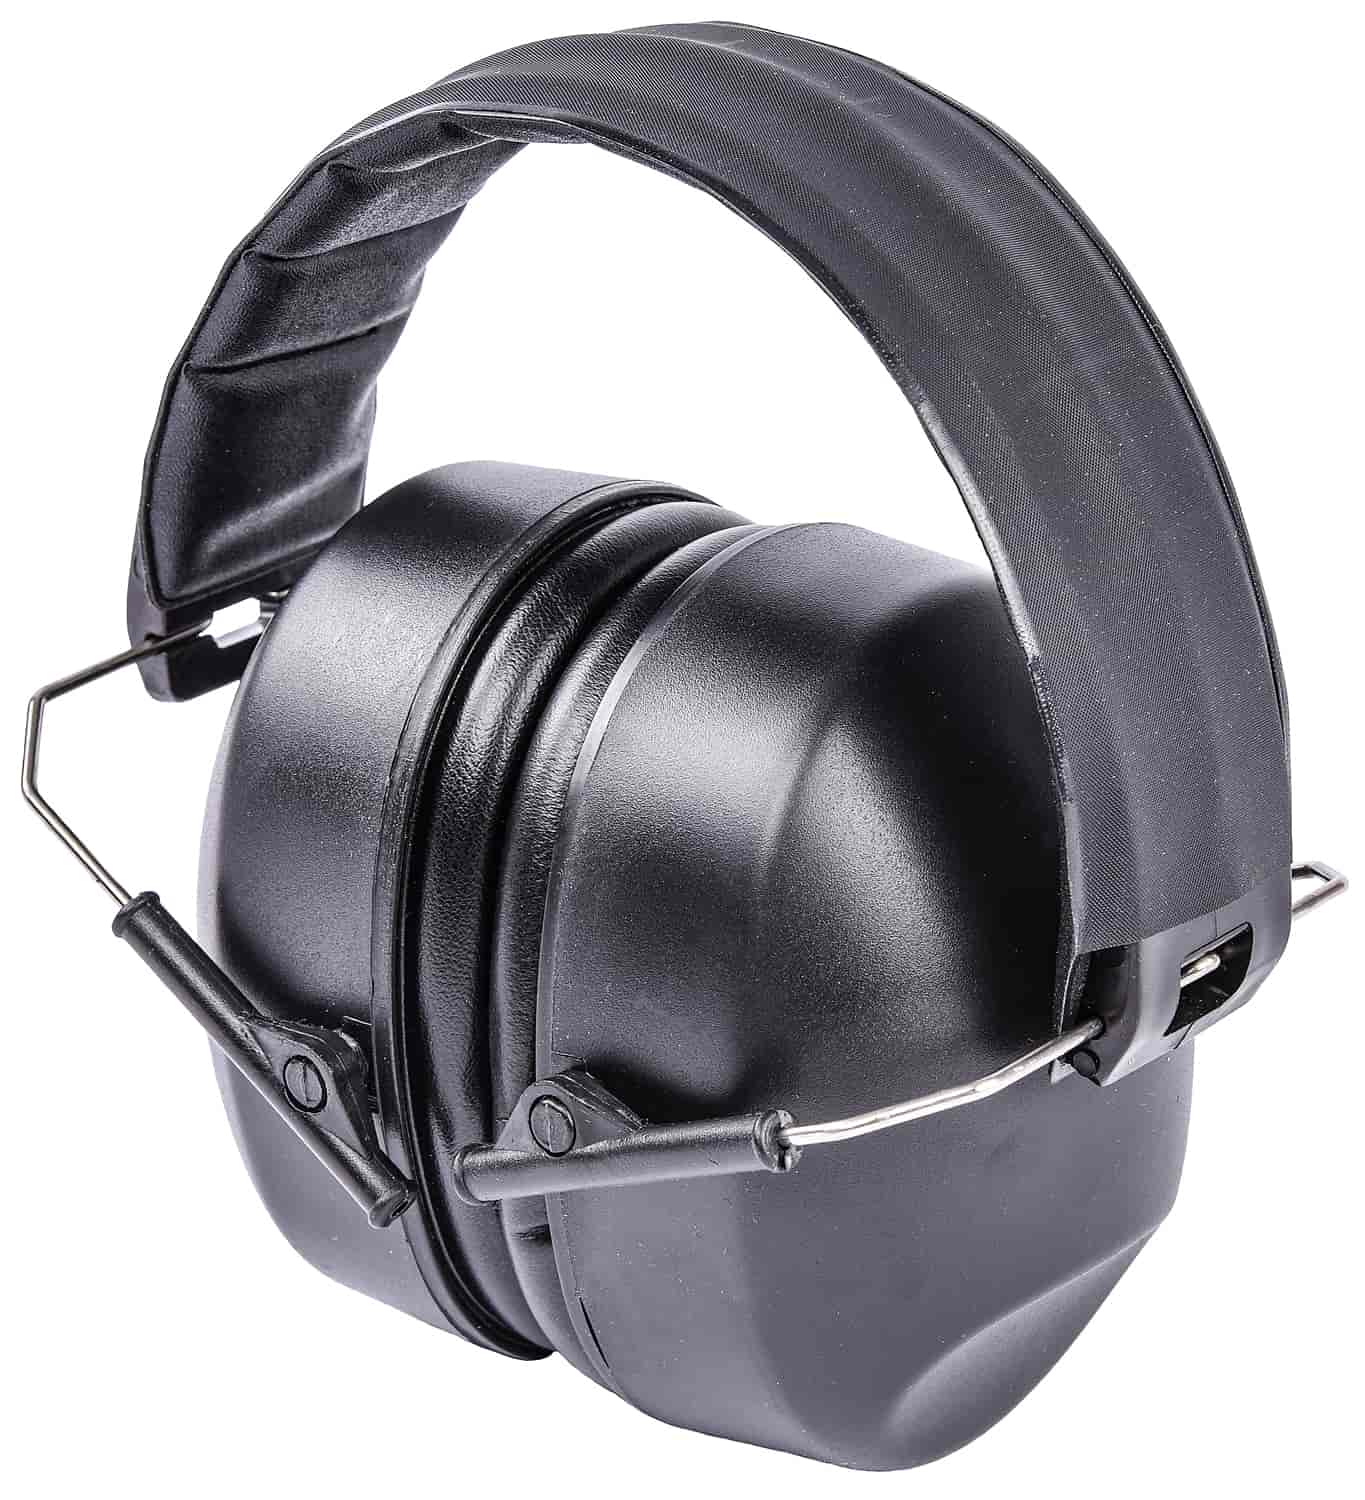 Hearing Protection Earmuffs [30 Decibel Noise Reduction]